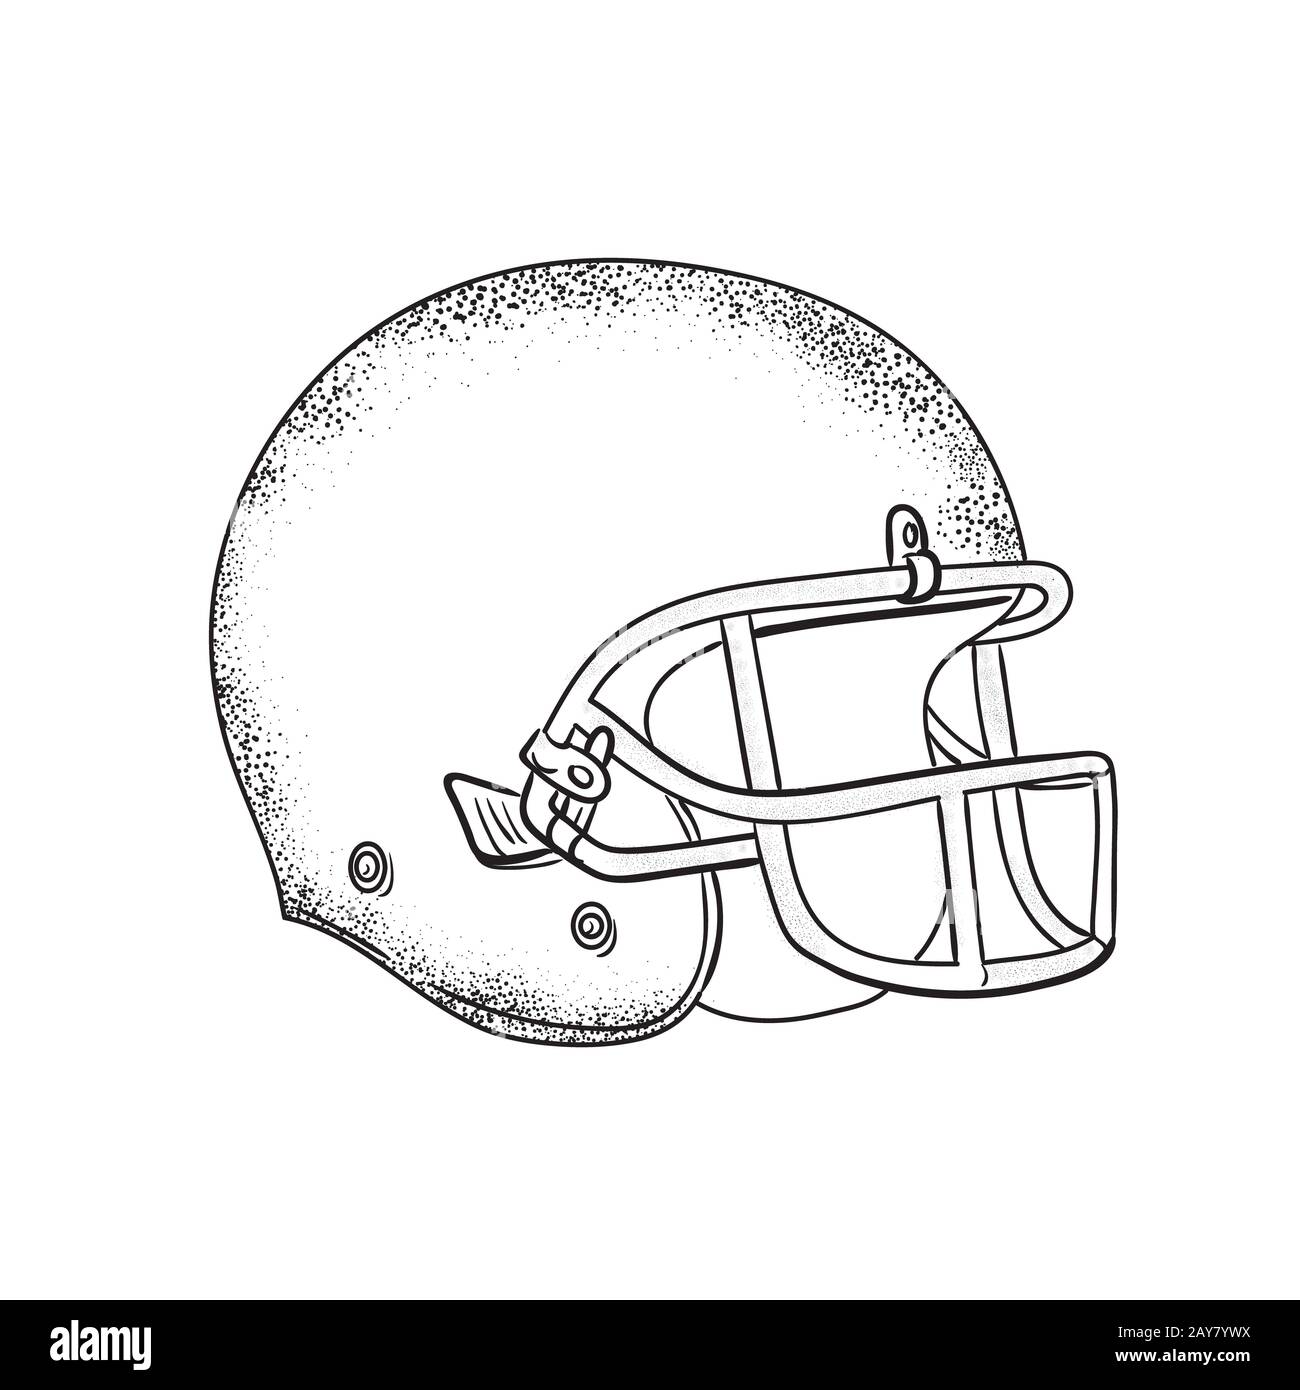 football player helmet drawing